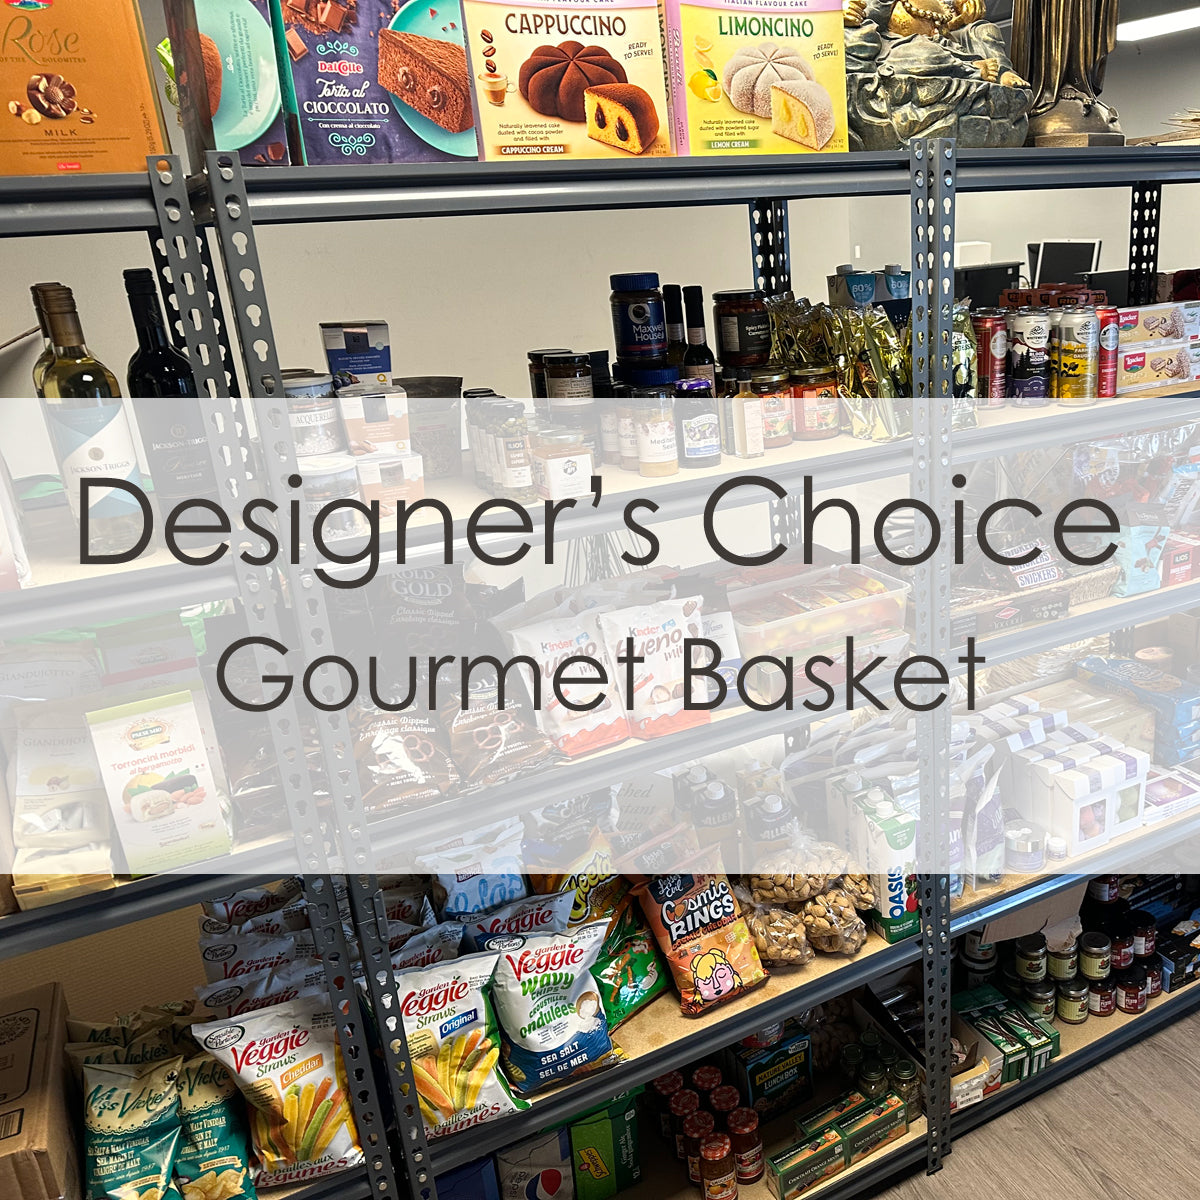 Desinger's Choice Gourmet Basket